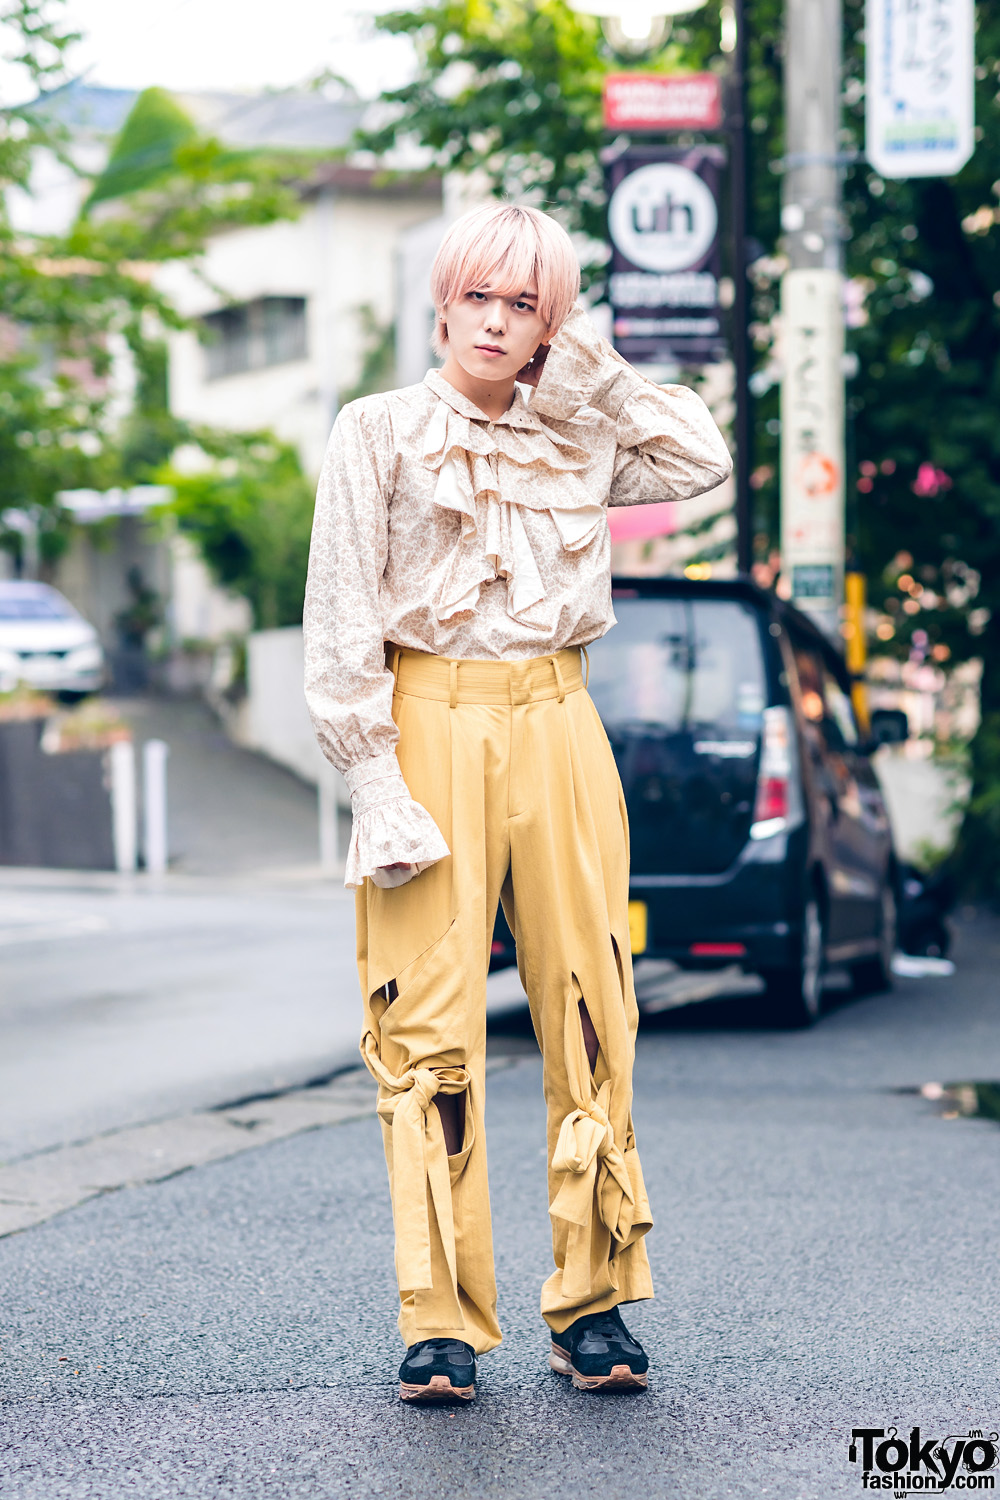 Cat Street Harajuku Style w/ Pink Hair, Window00 Paisley Ruffle Shirt, Windows00 Cutout Bow Pants & Suede Sneakers